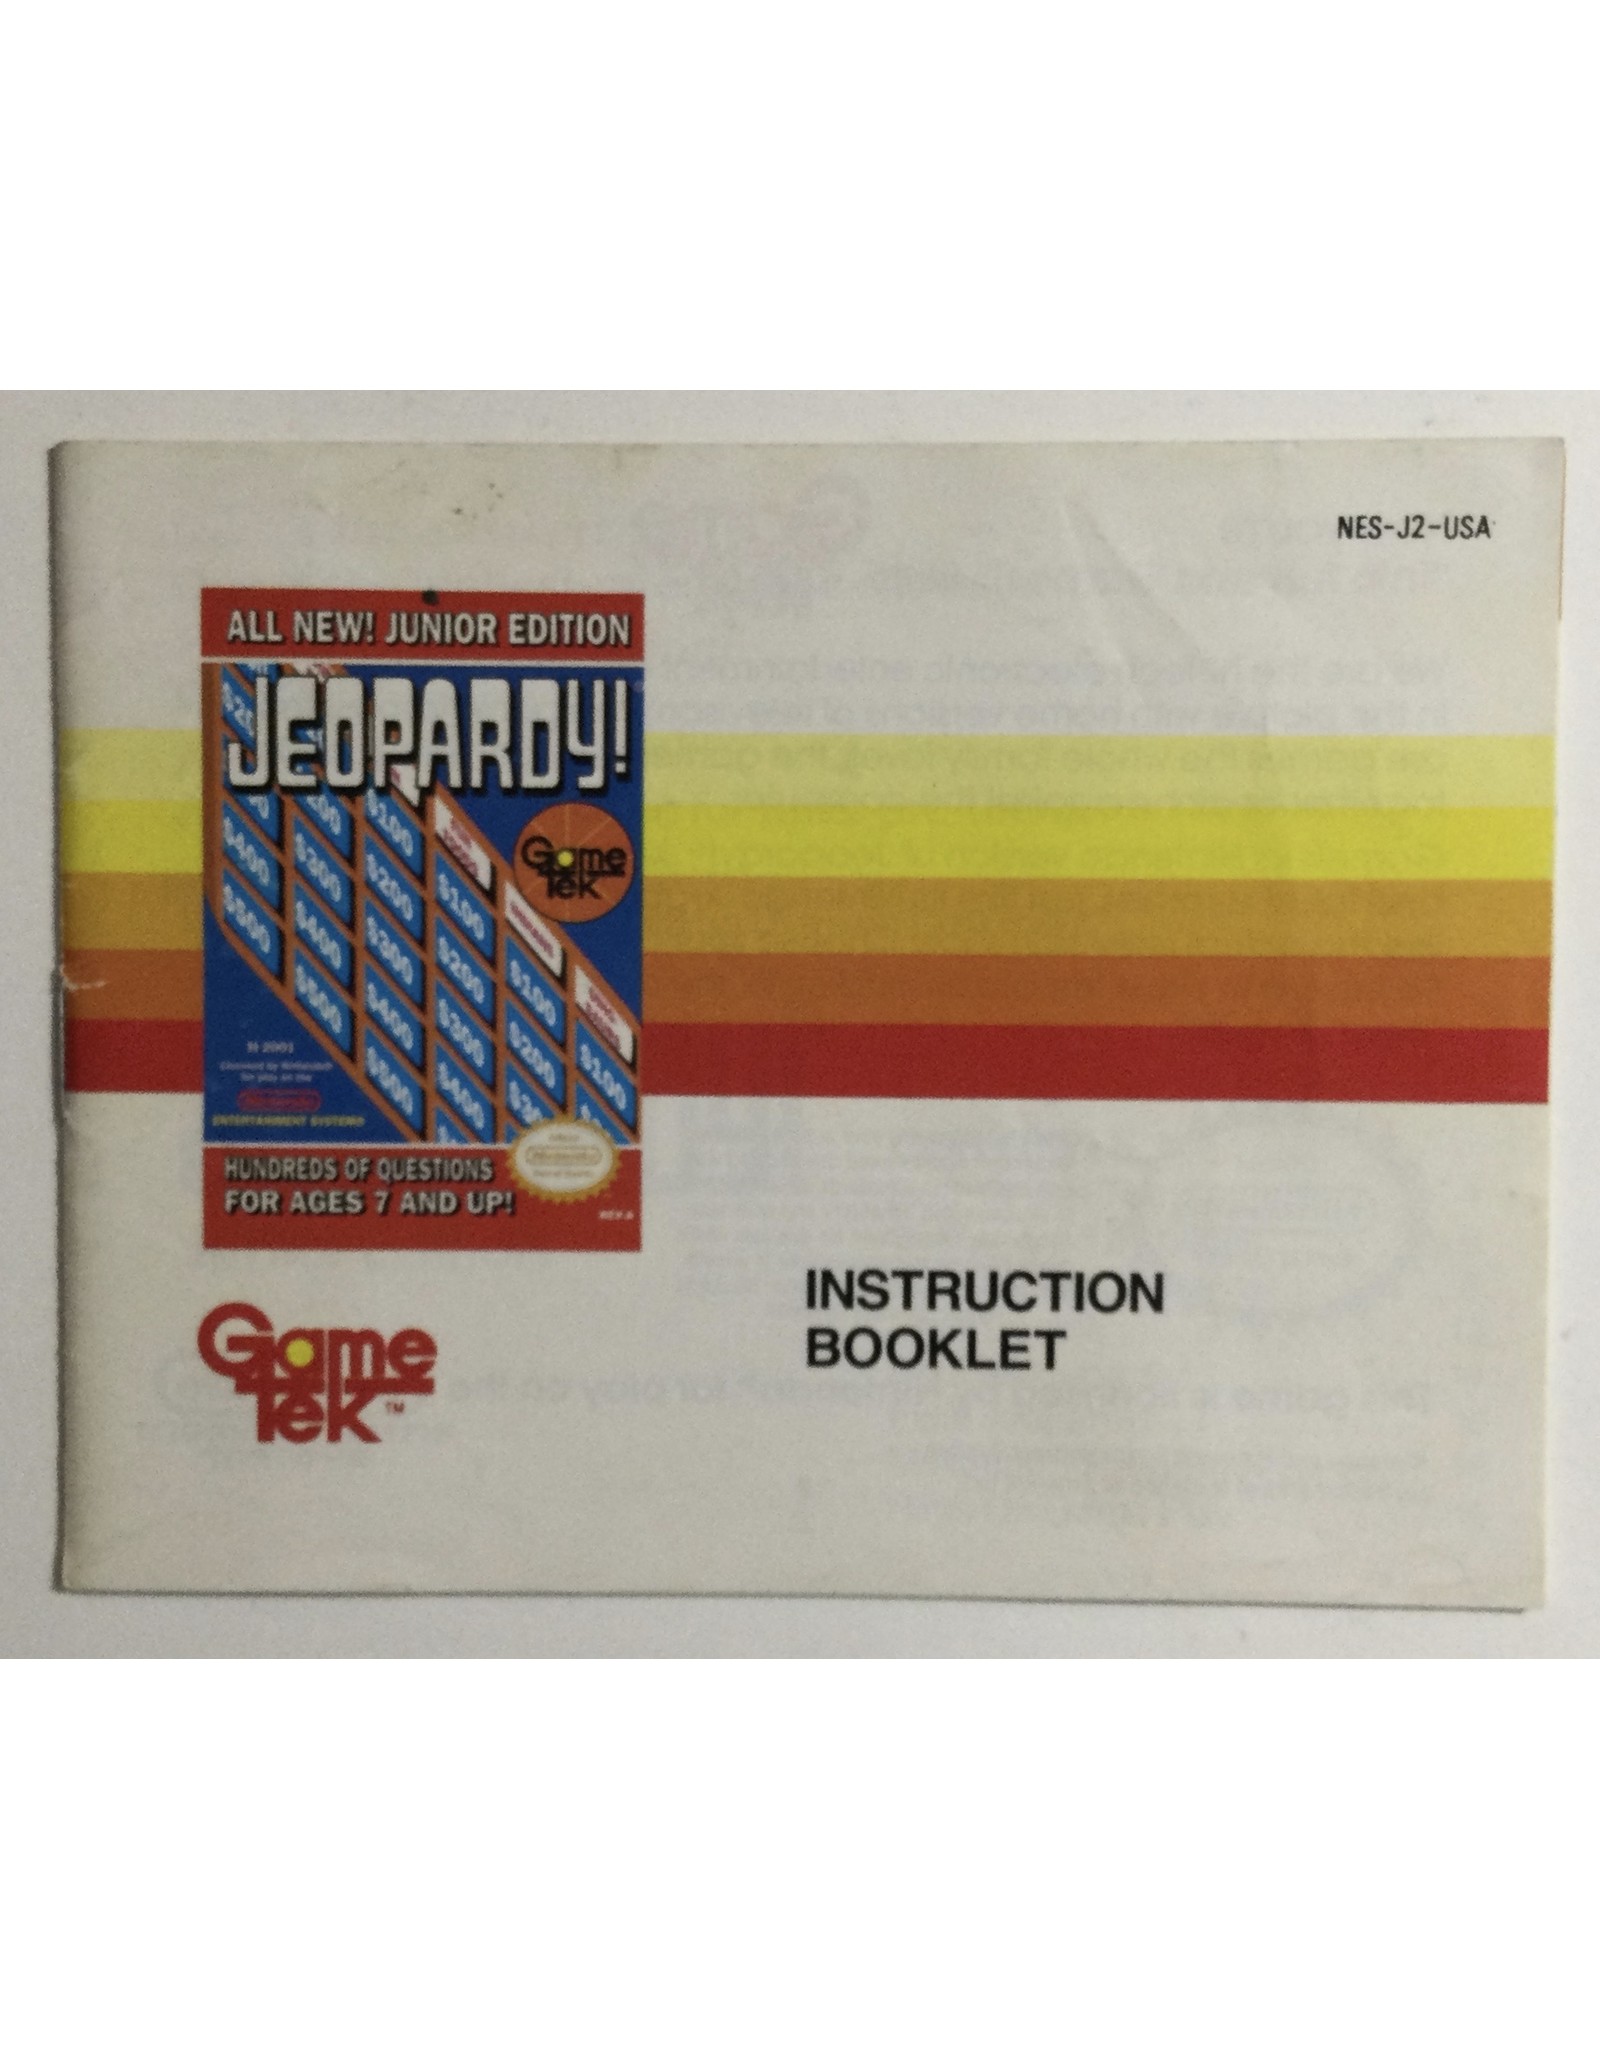 GAMETEK Jeopardy! Junior Edition for Nintendo Entertainment system (NES)